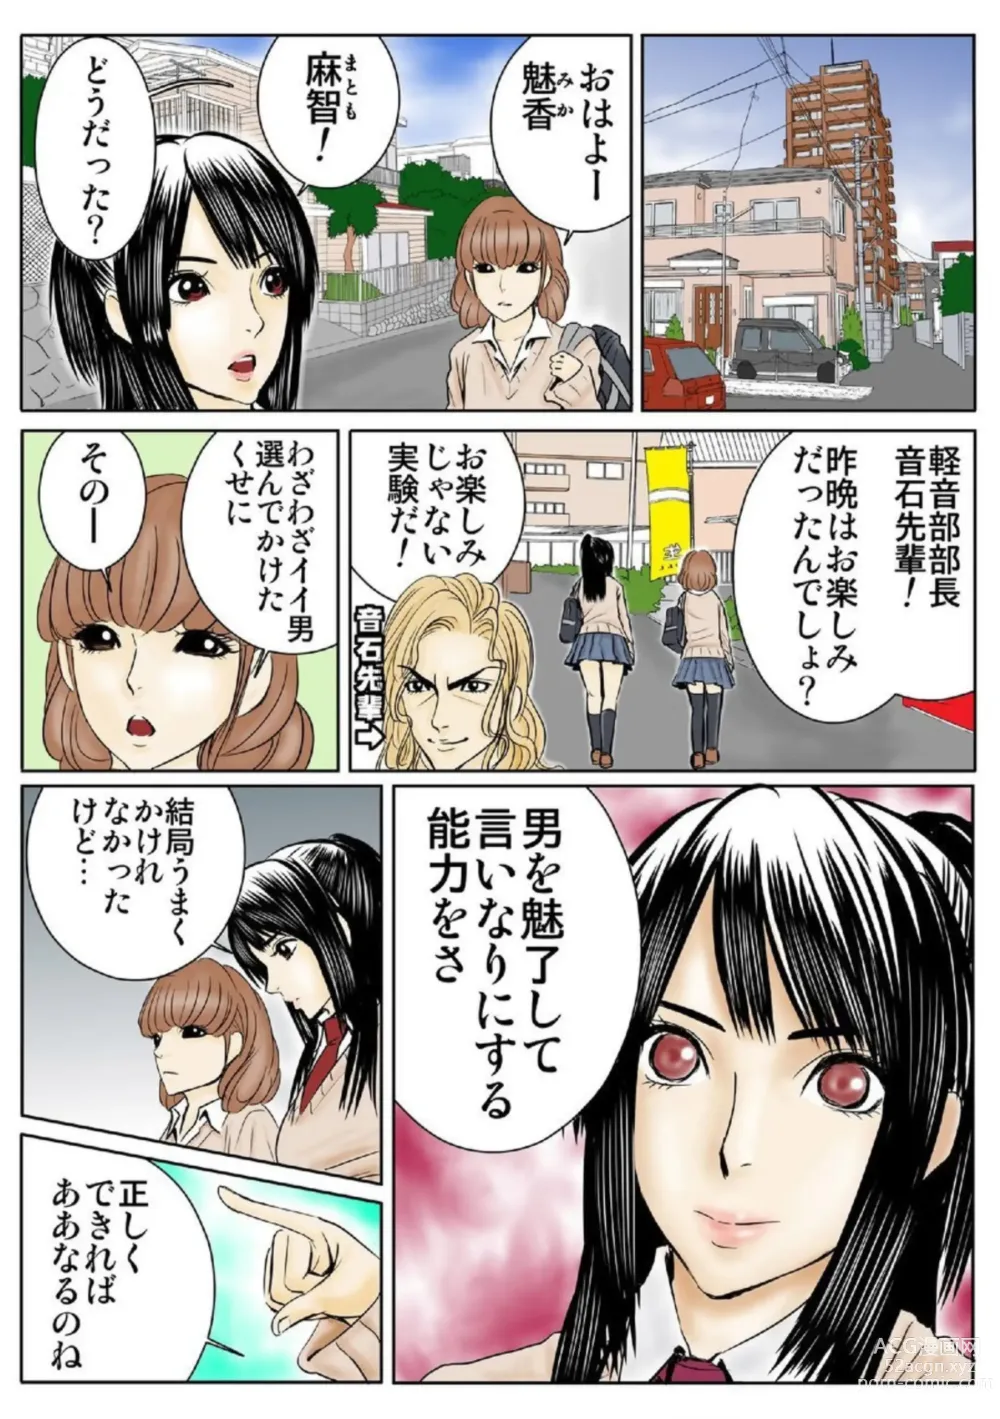 Page 3 of manga Ganriki! Miryō no Hōkago 1